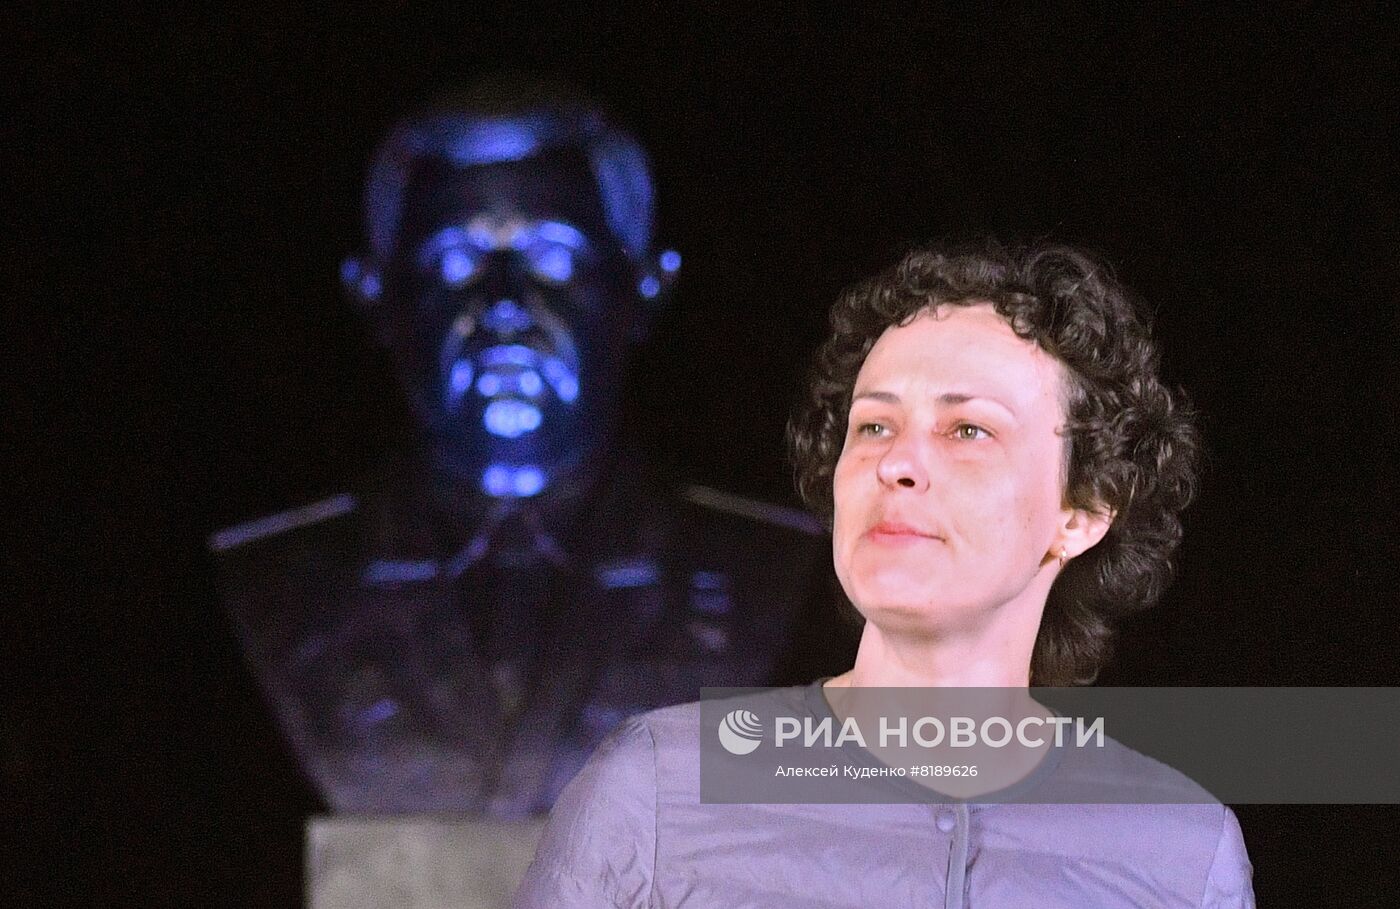 Открытие памятника экс-главе ДНР А. Захарченко